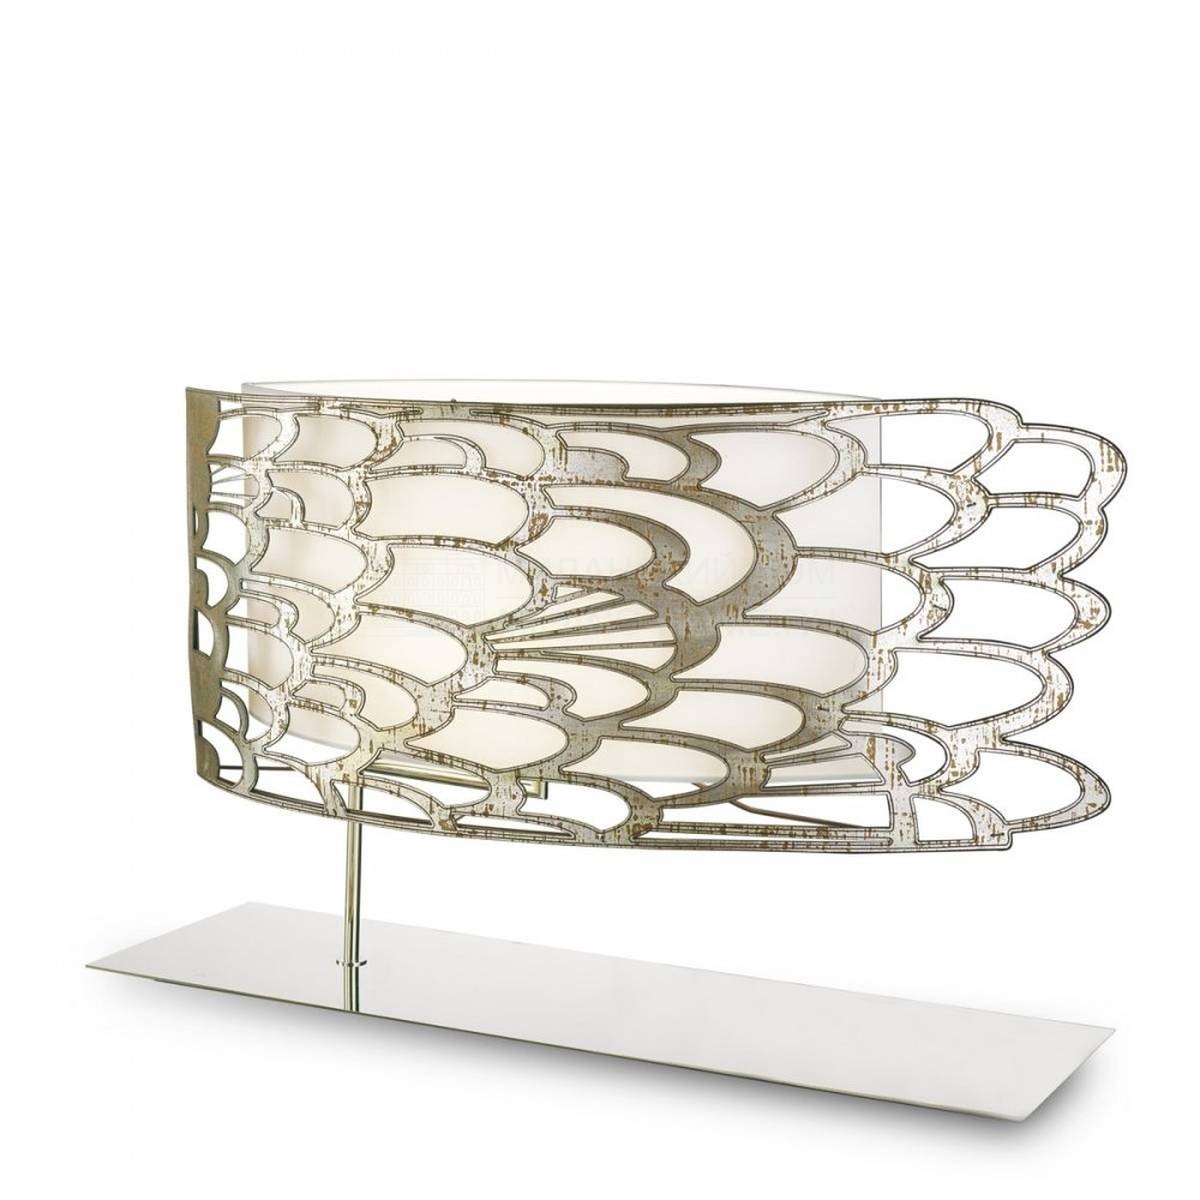 Настольная лампа Fisheye large table lamp из Италии фабрики MARIONI